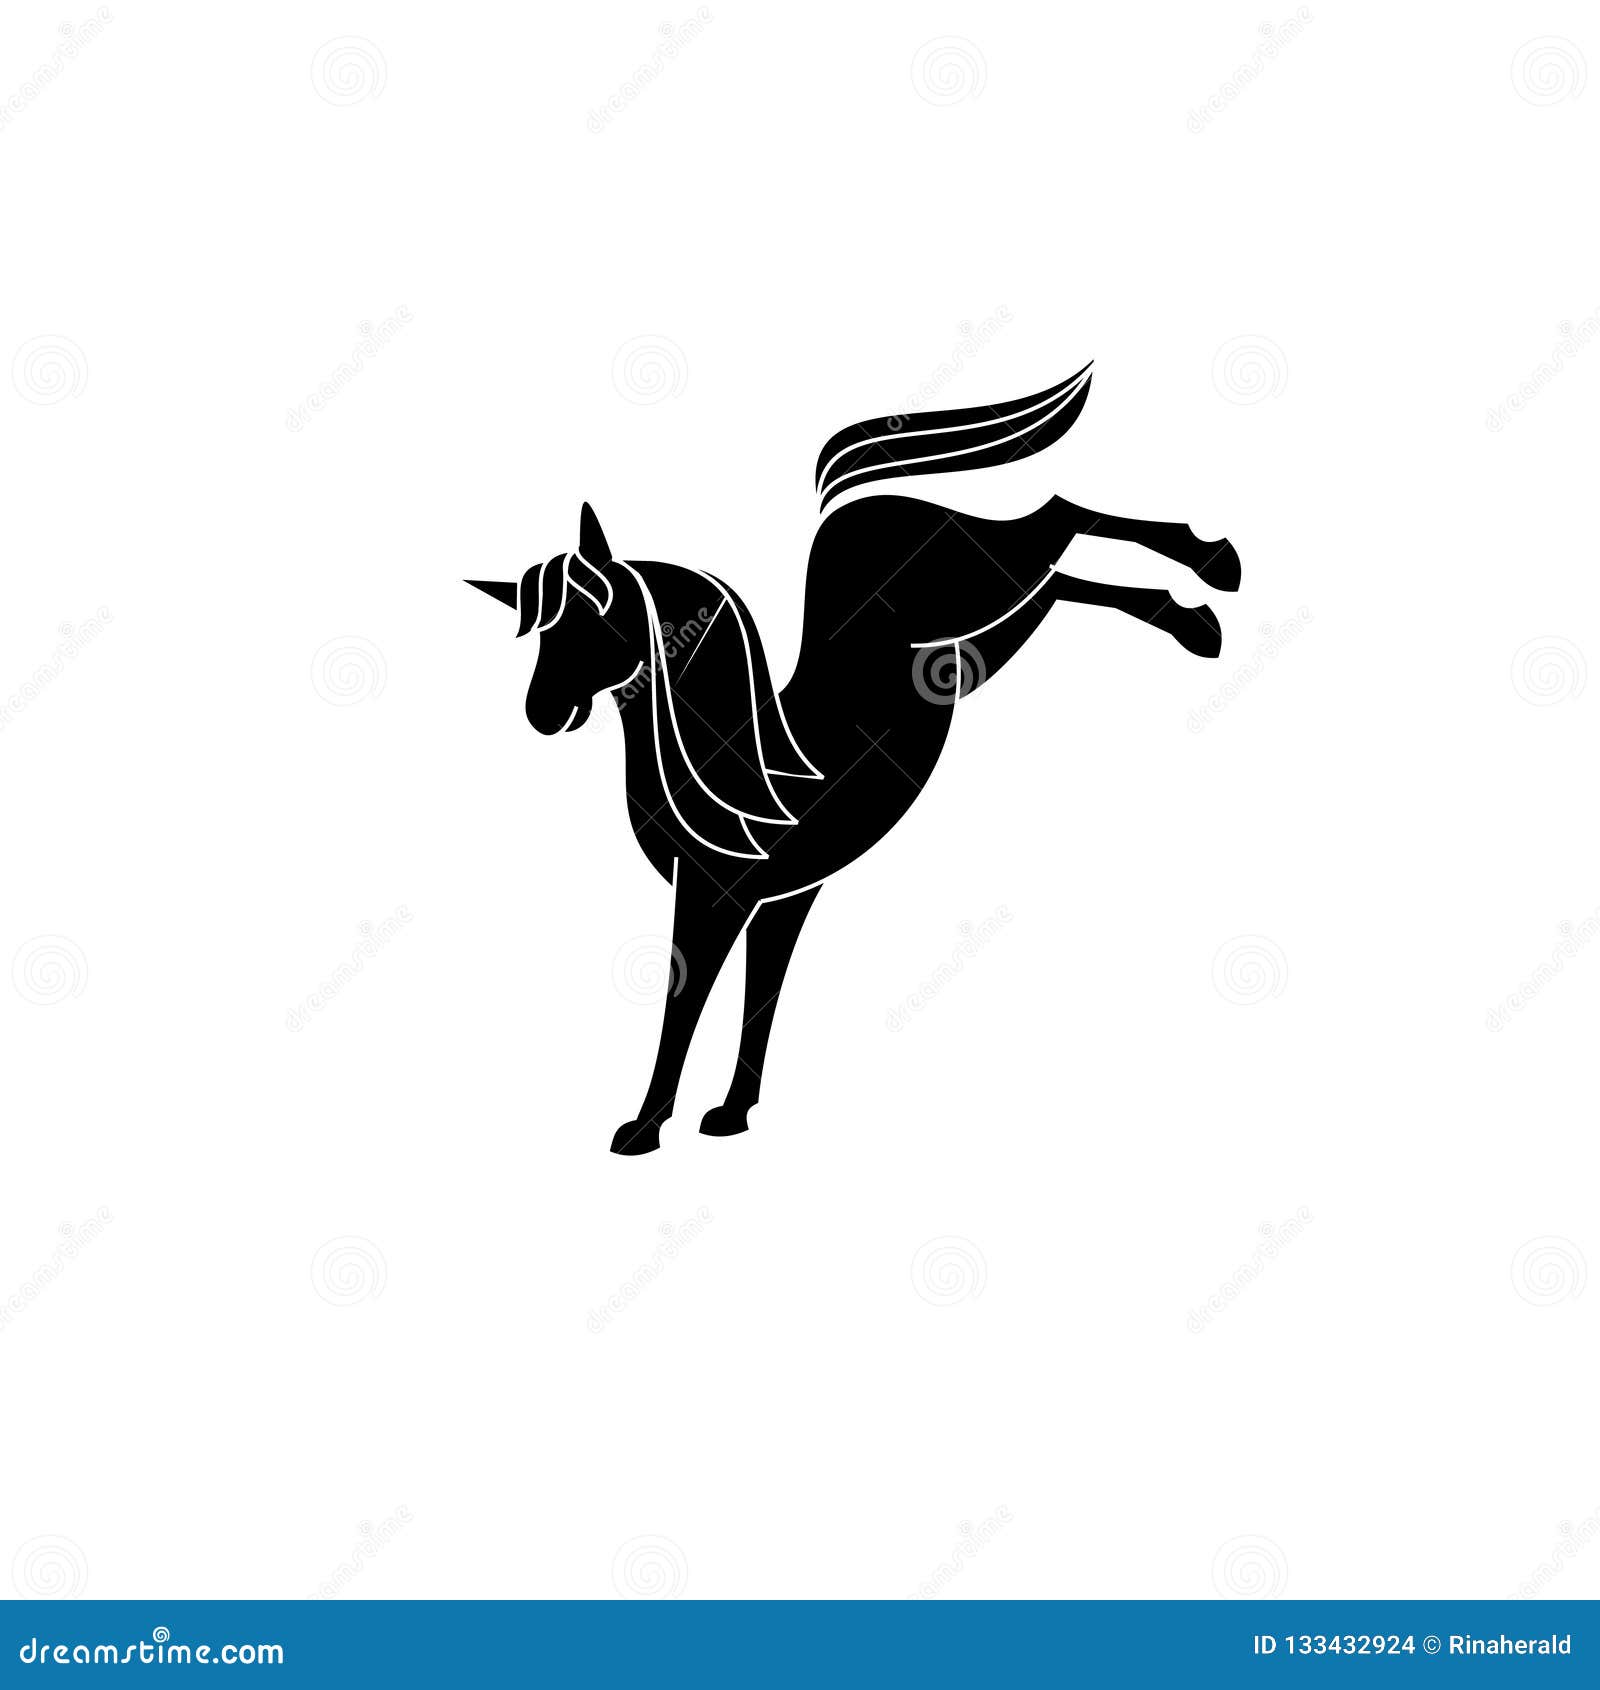 pegasus unicorn logo icon s   with black shilouette style 